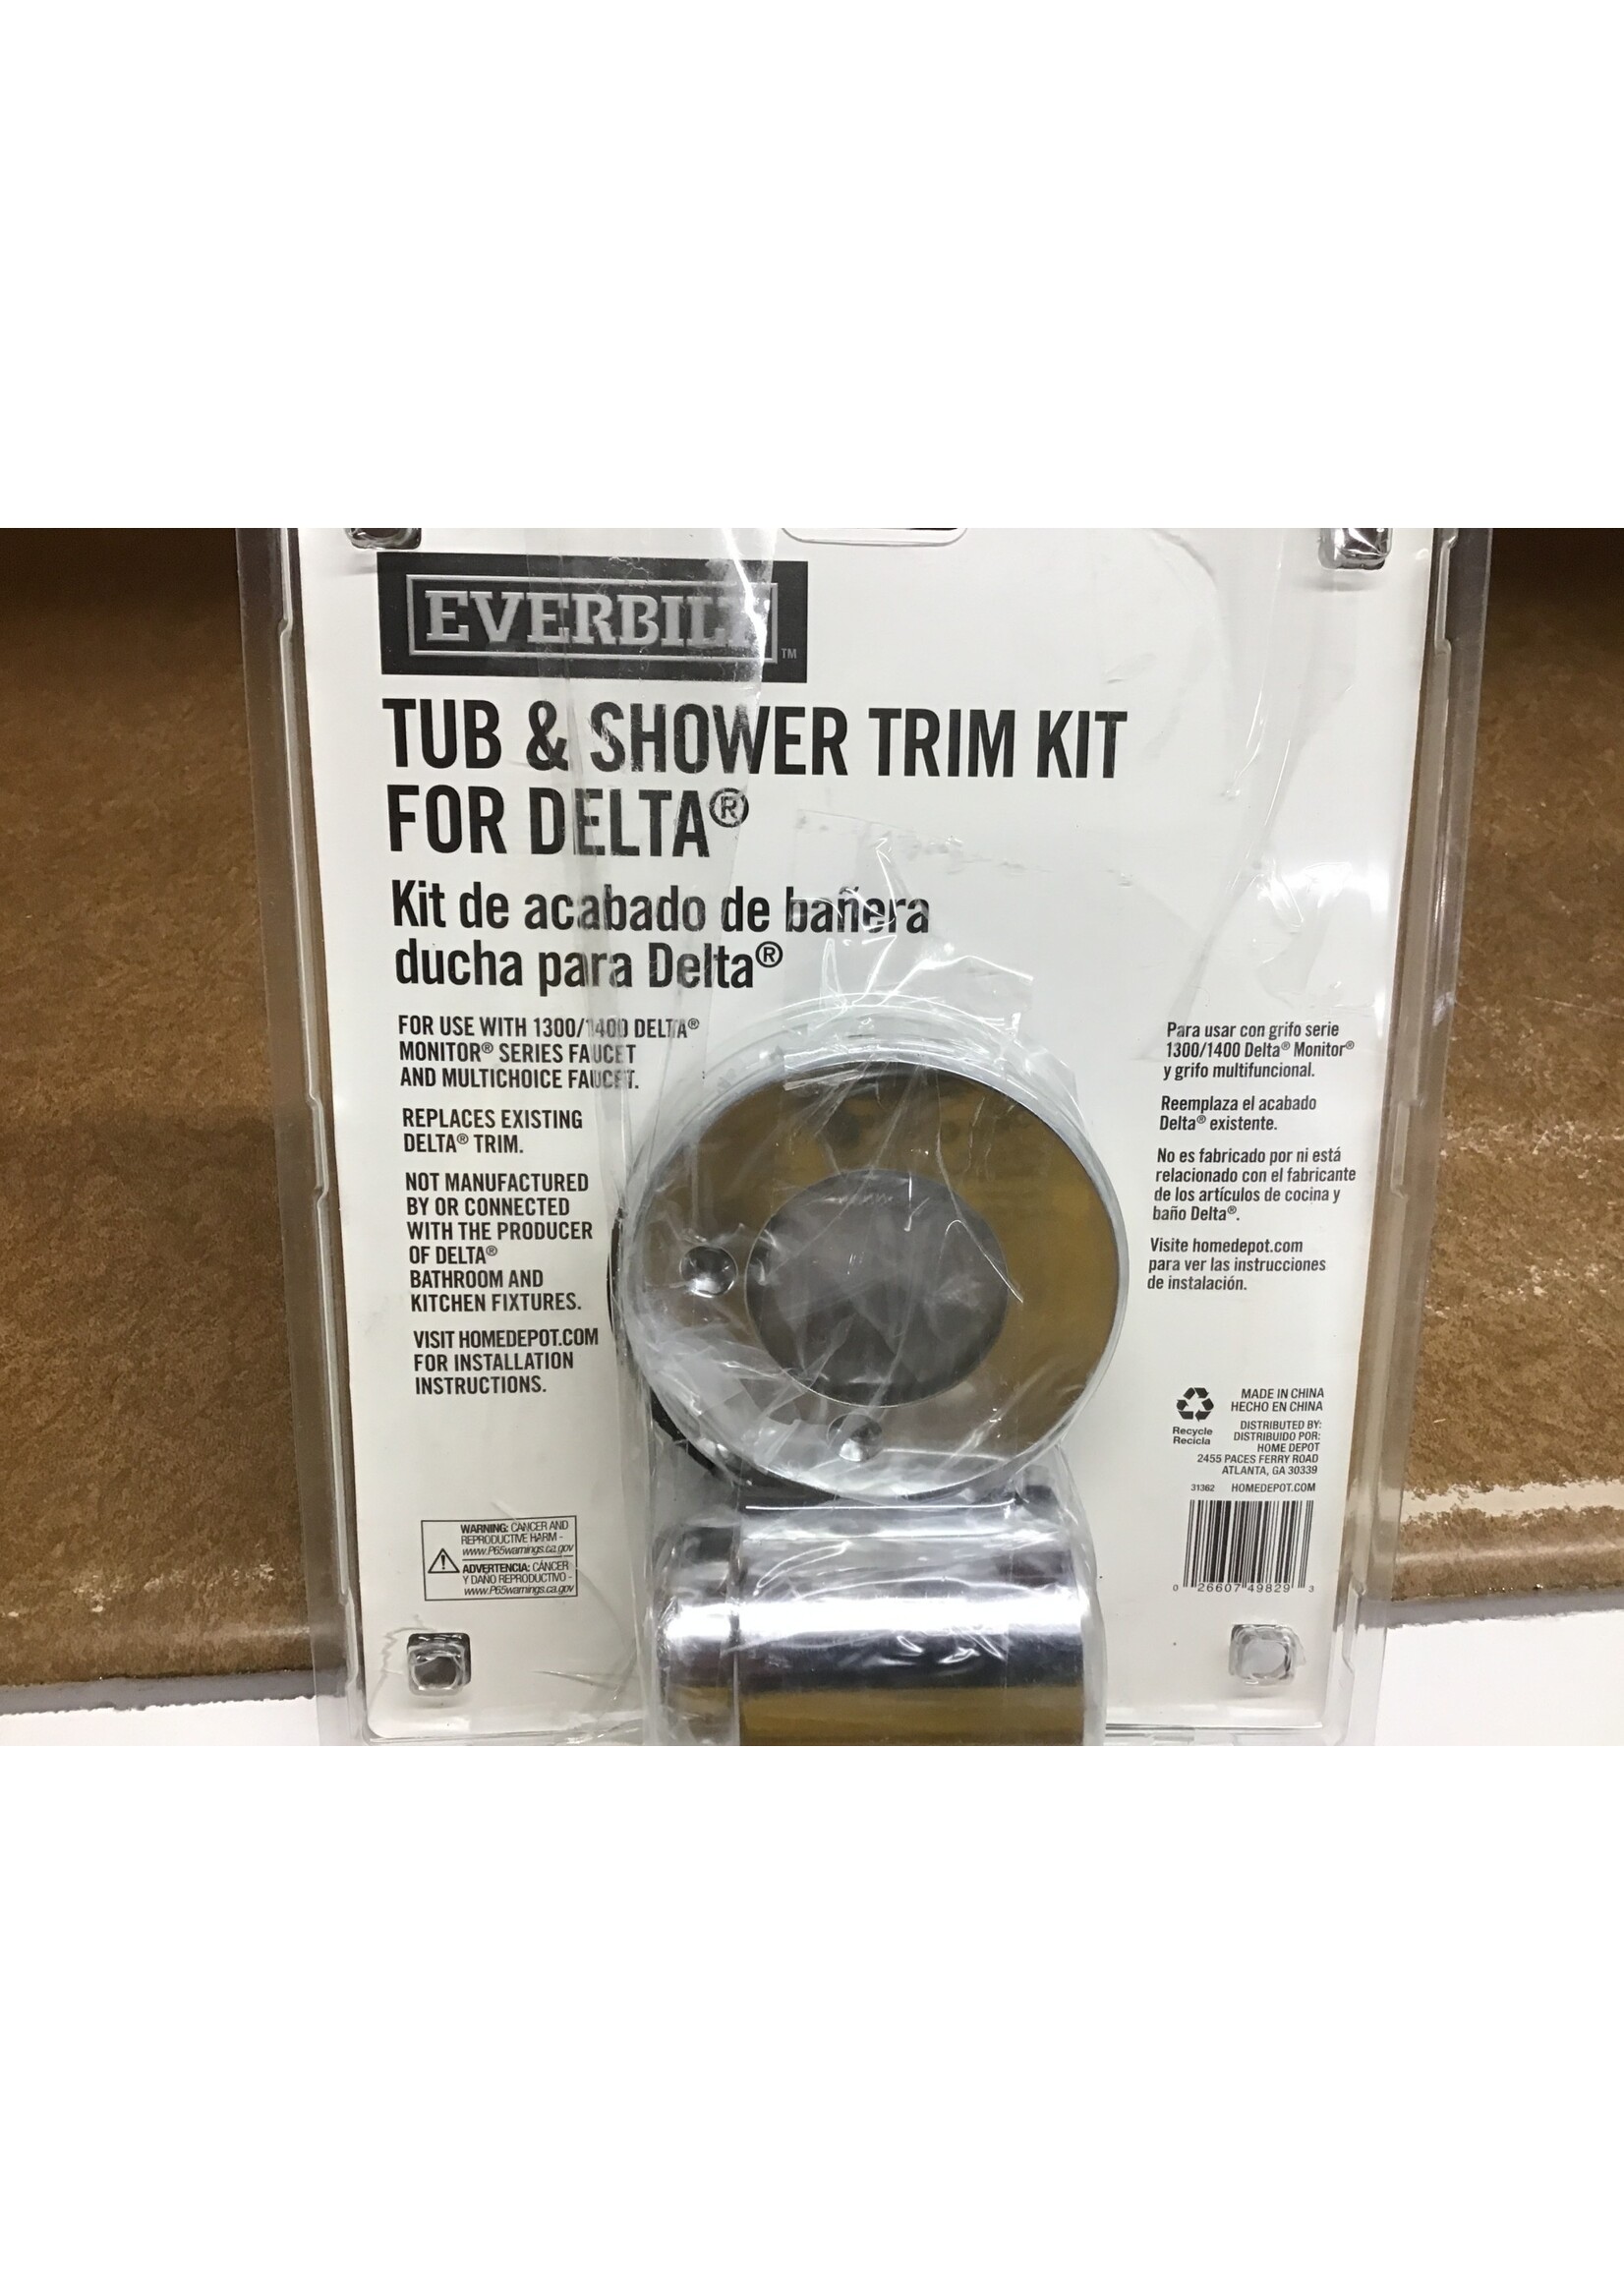 Everbilt Tub & Shower Trim Kit For Delta **box damage